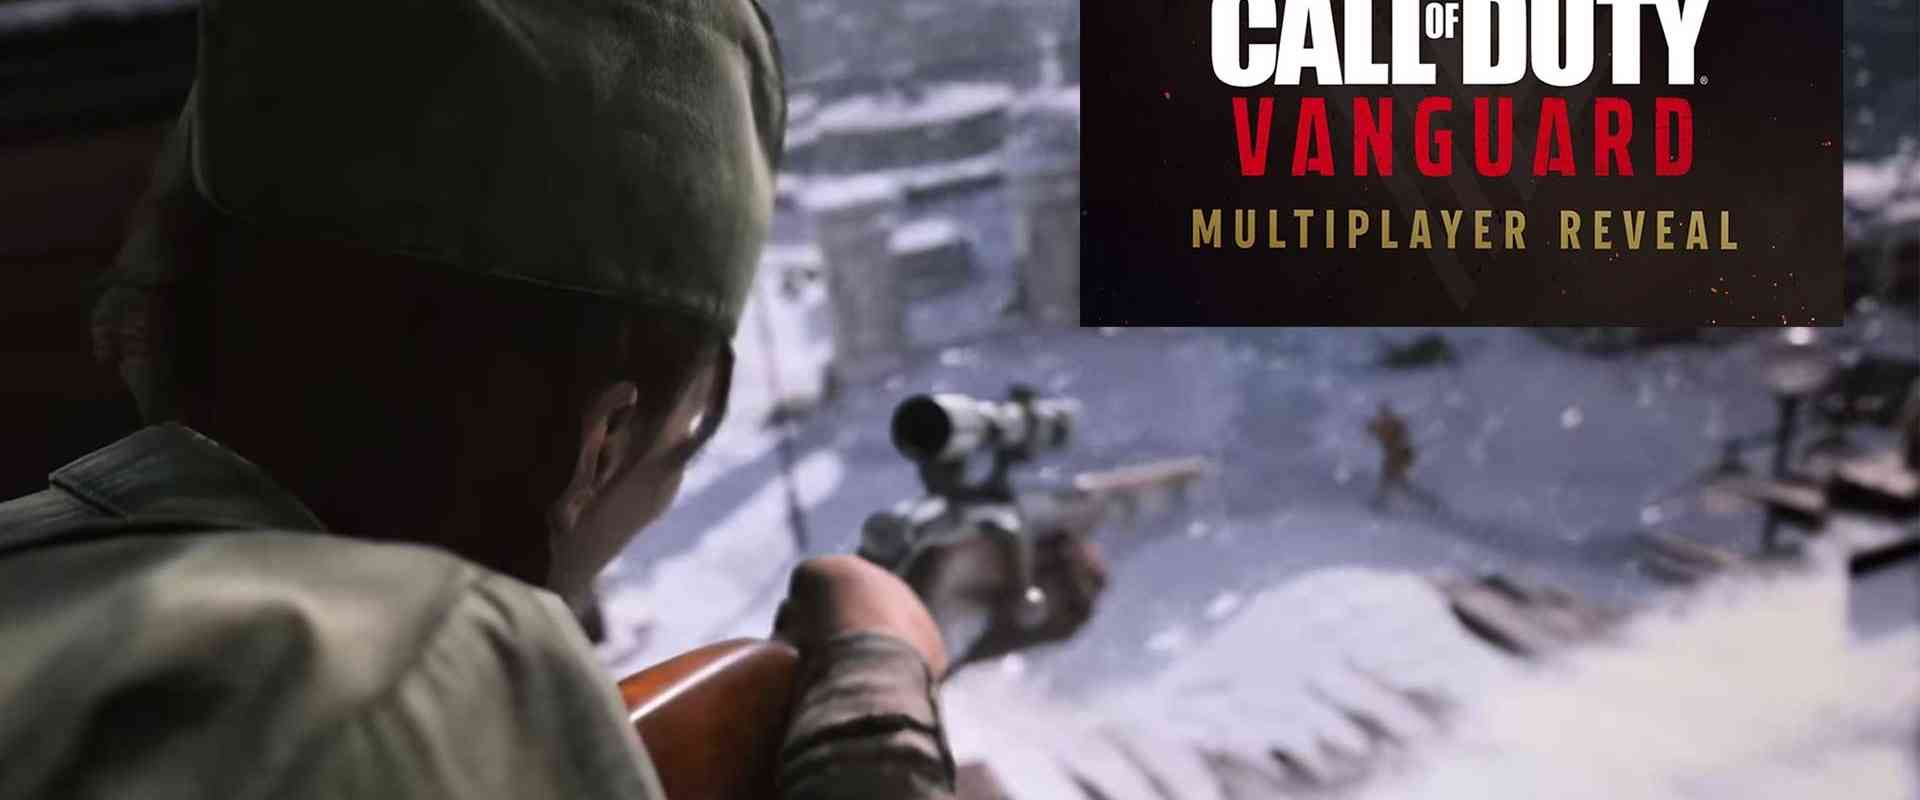 call of duty vanguard multiplayer reveal